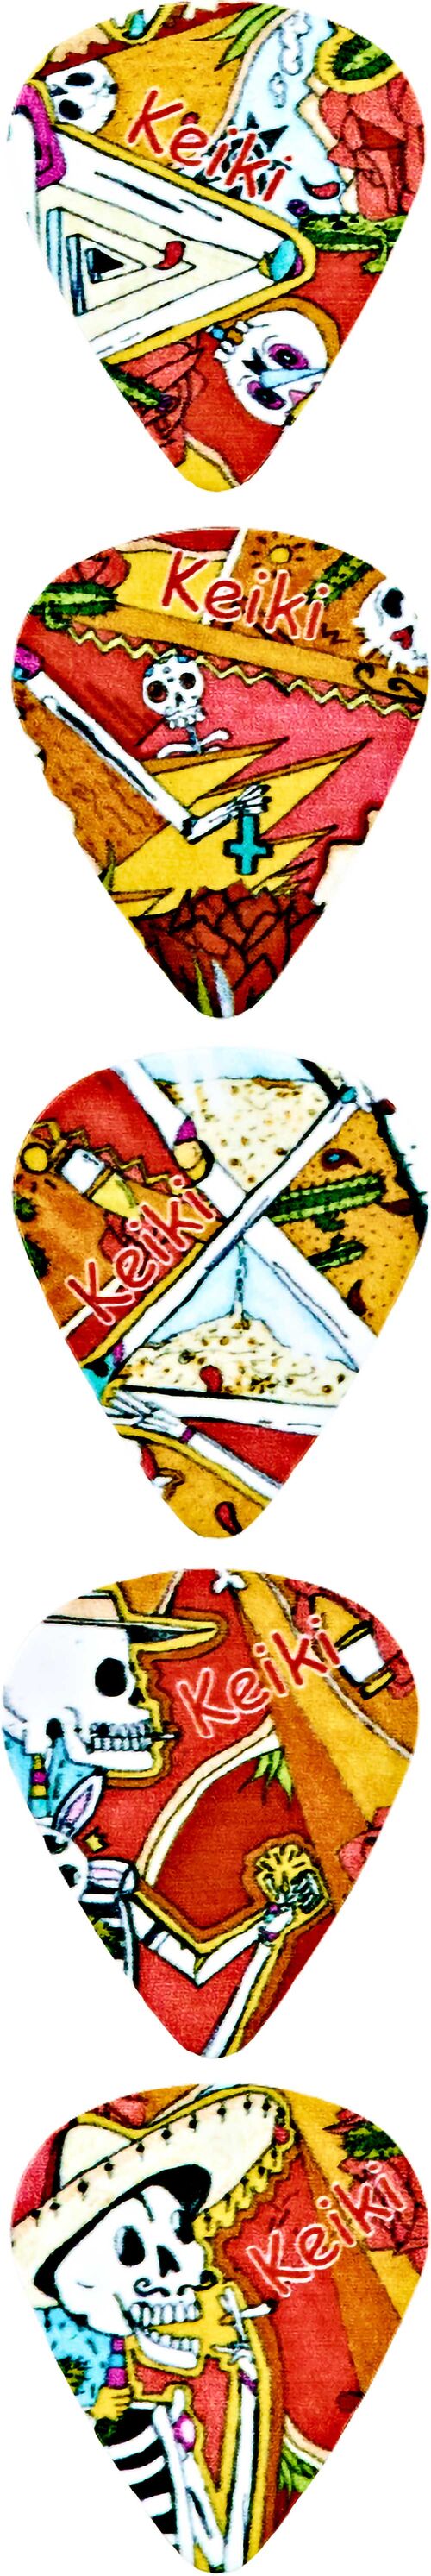 Keiki Pack de Pas Kpem-5